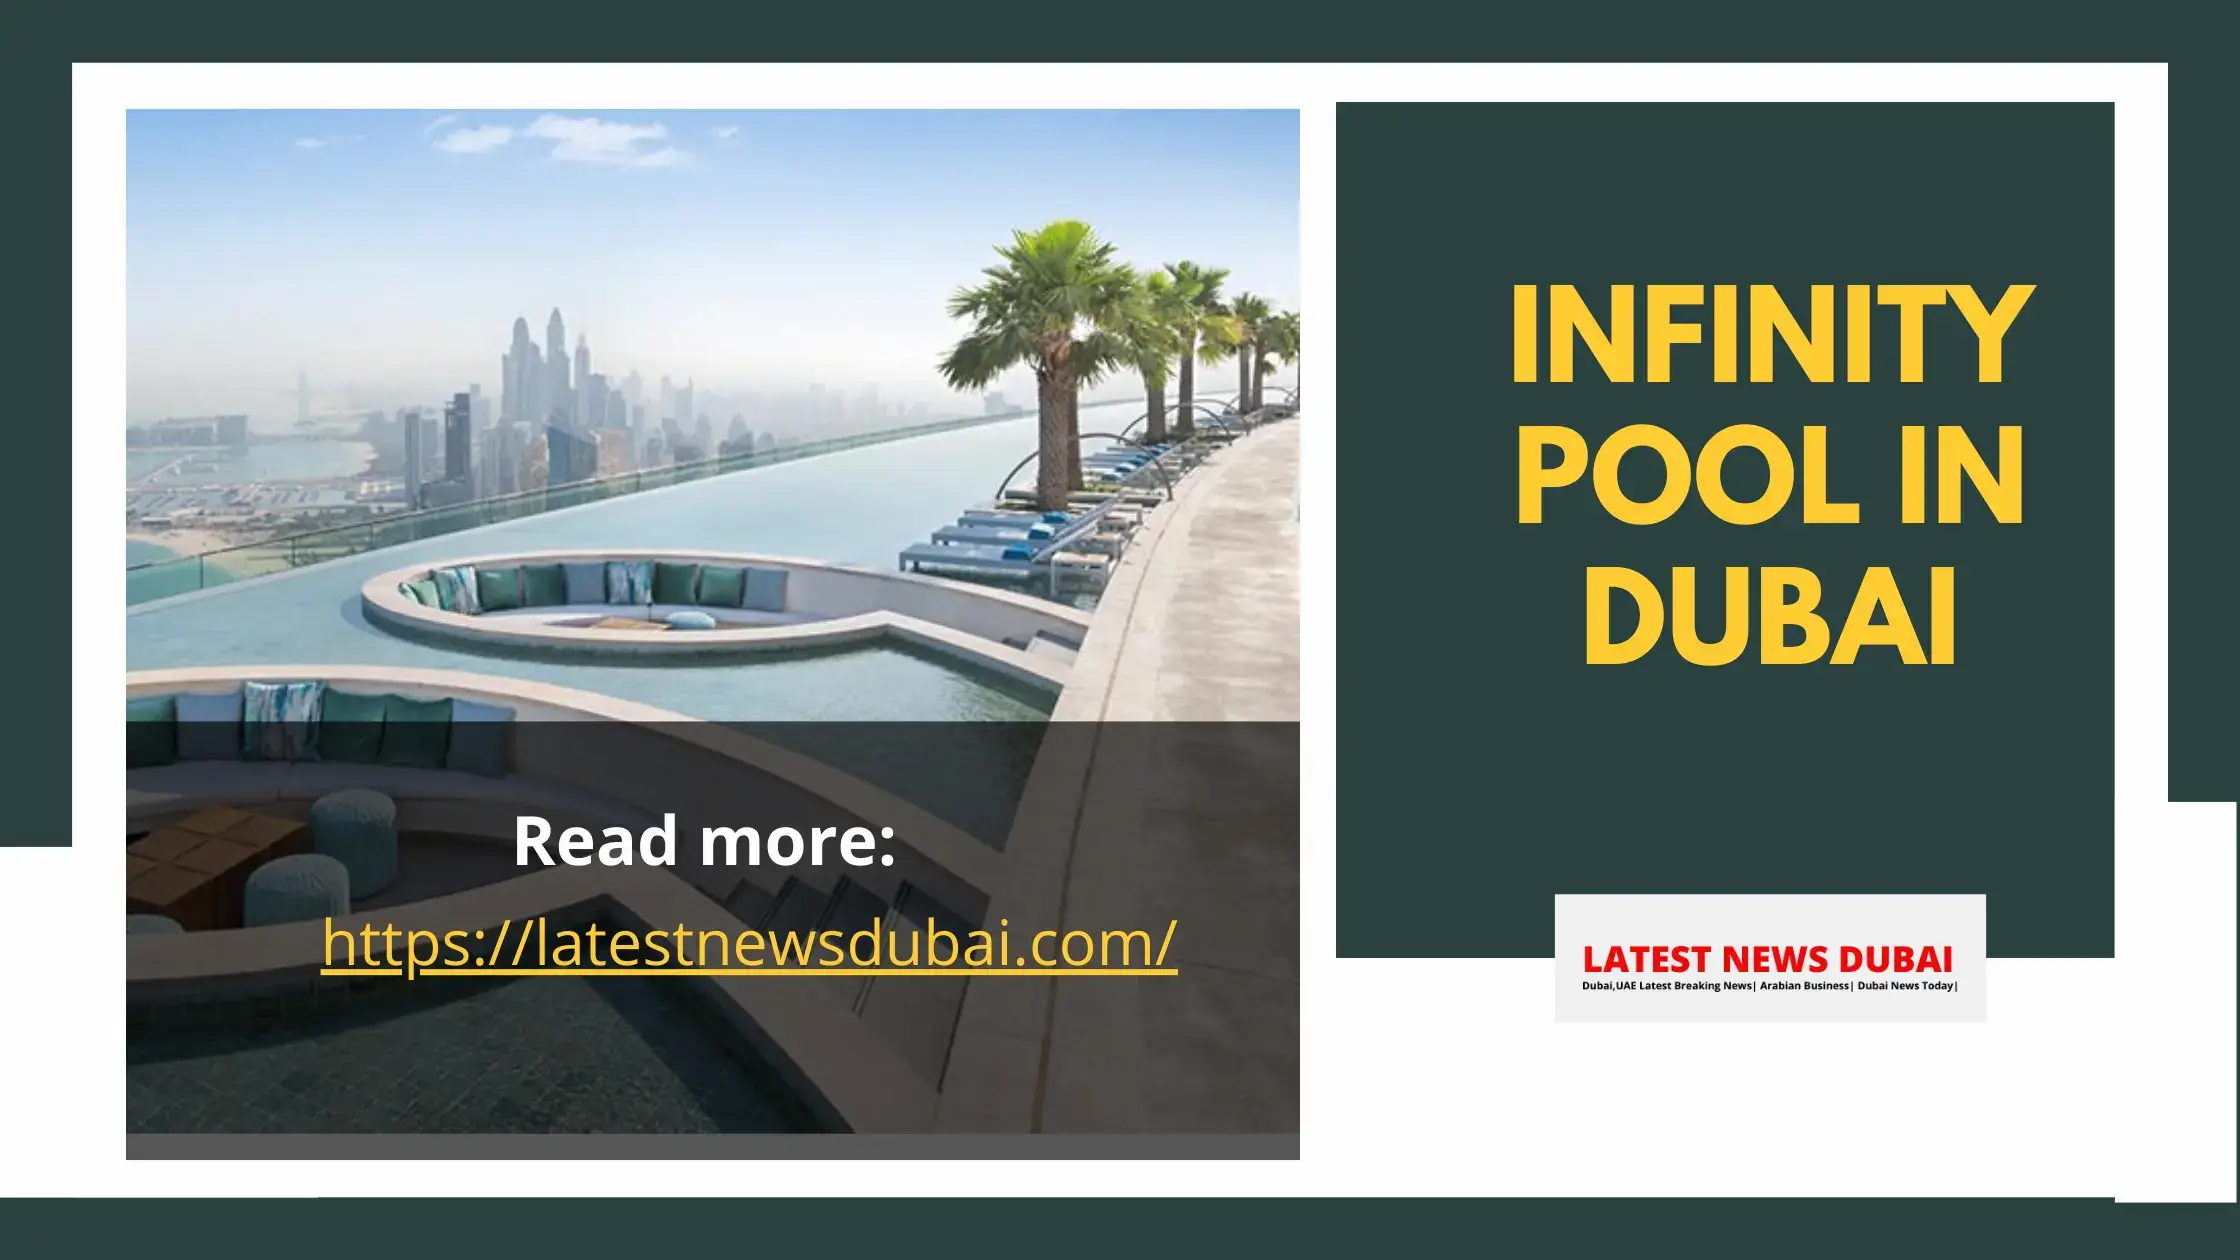 INFINITY POOL DUBAI